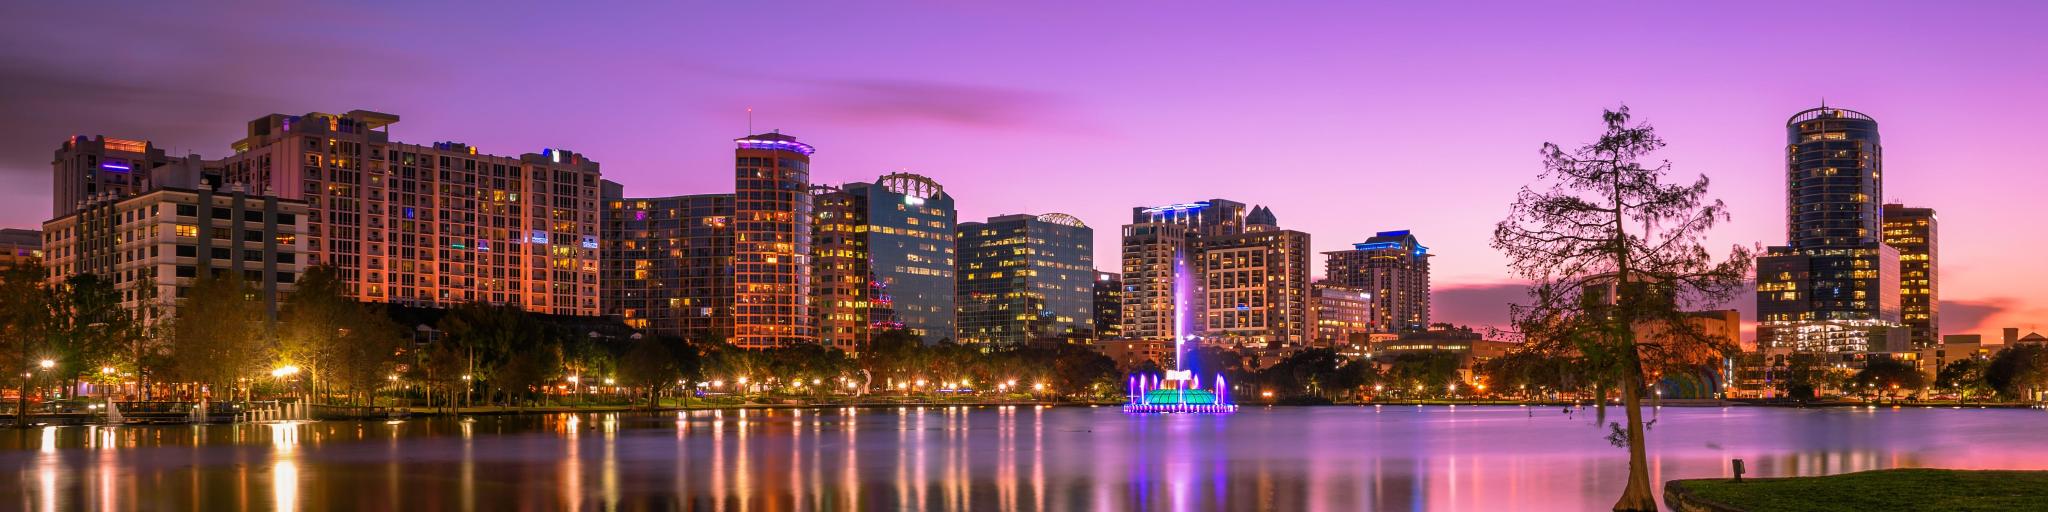 Colorful sunset above Lake Eola and city skyline in Orlando, Florida, USA